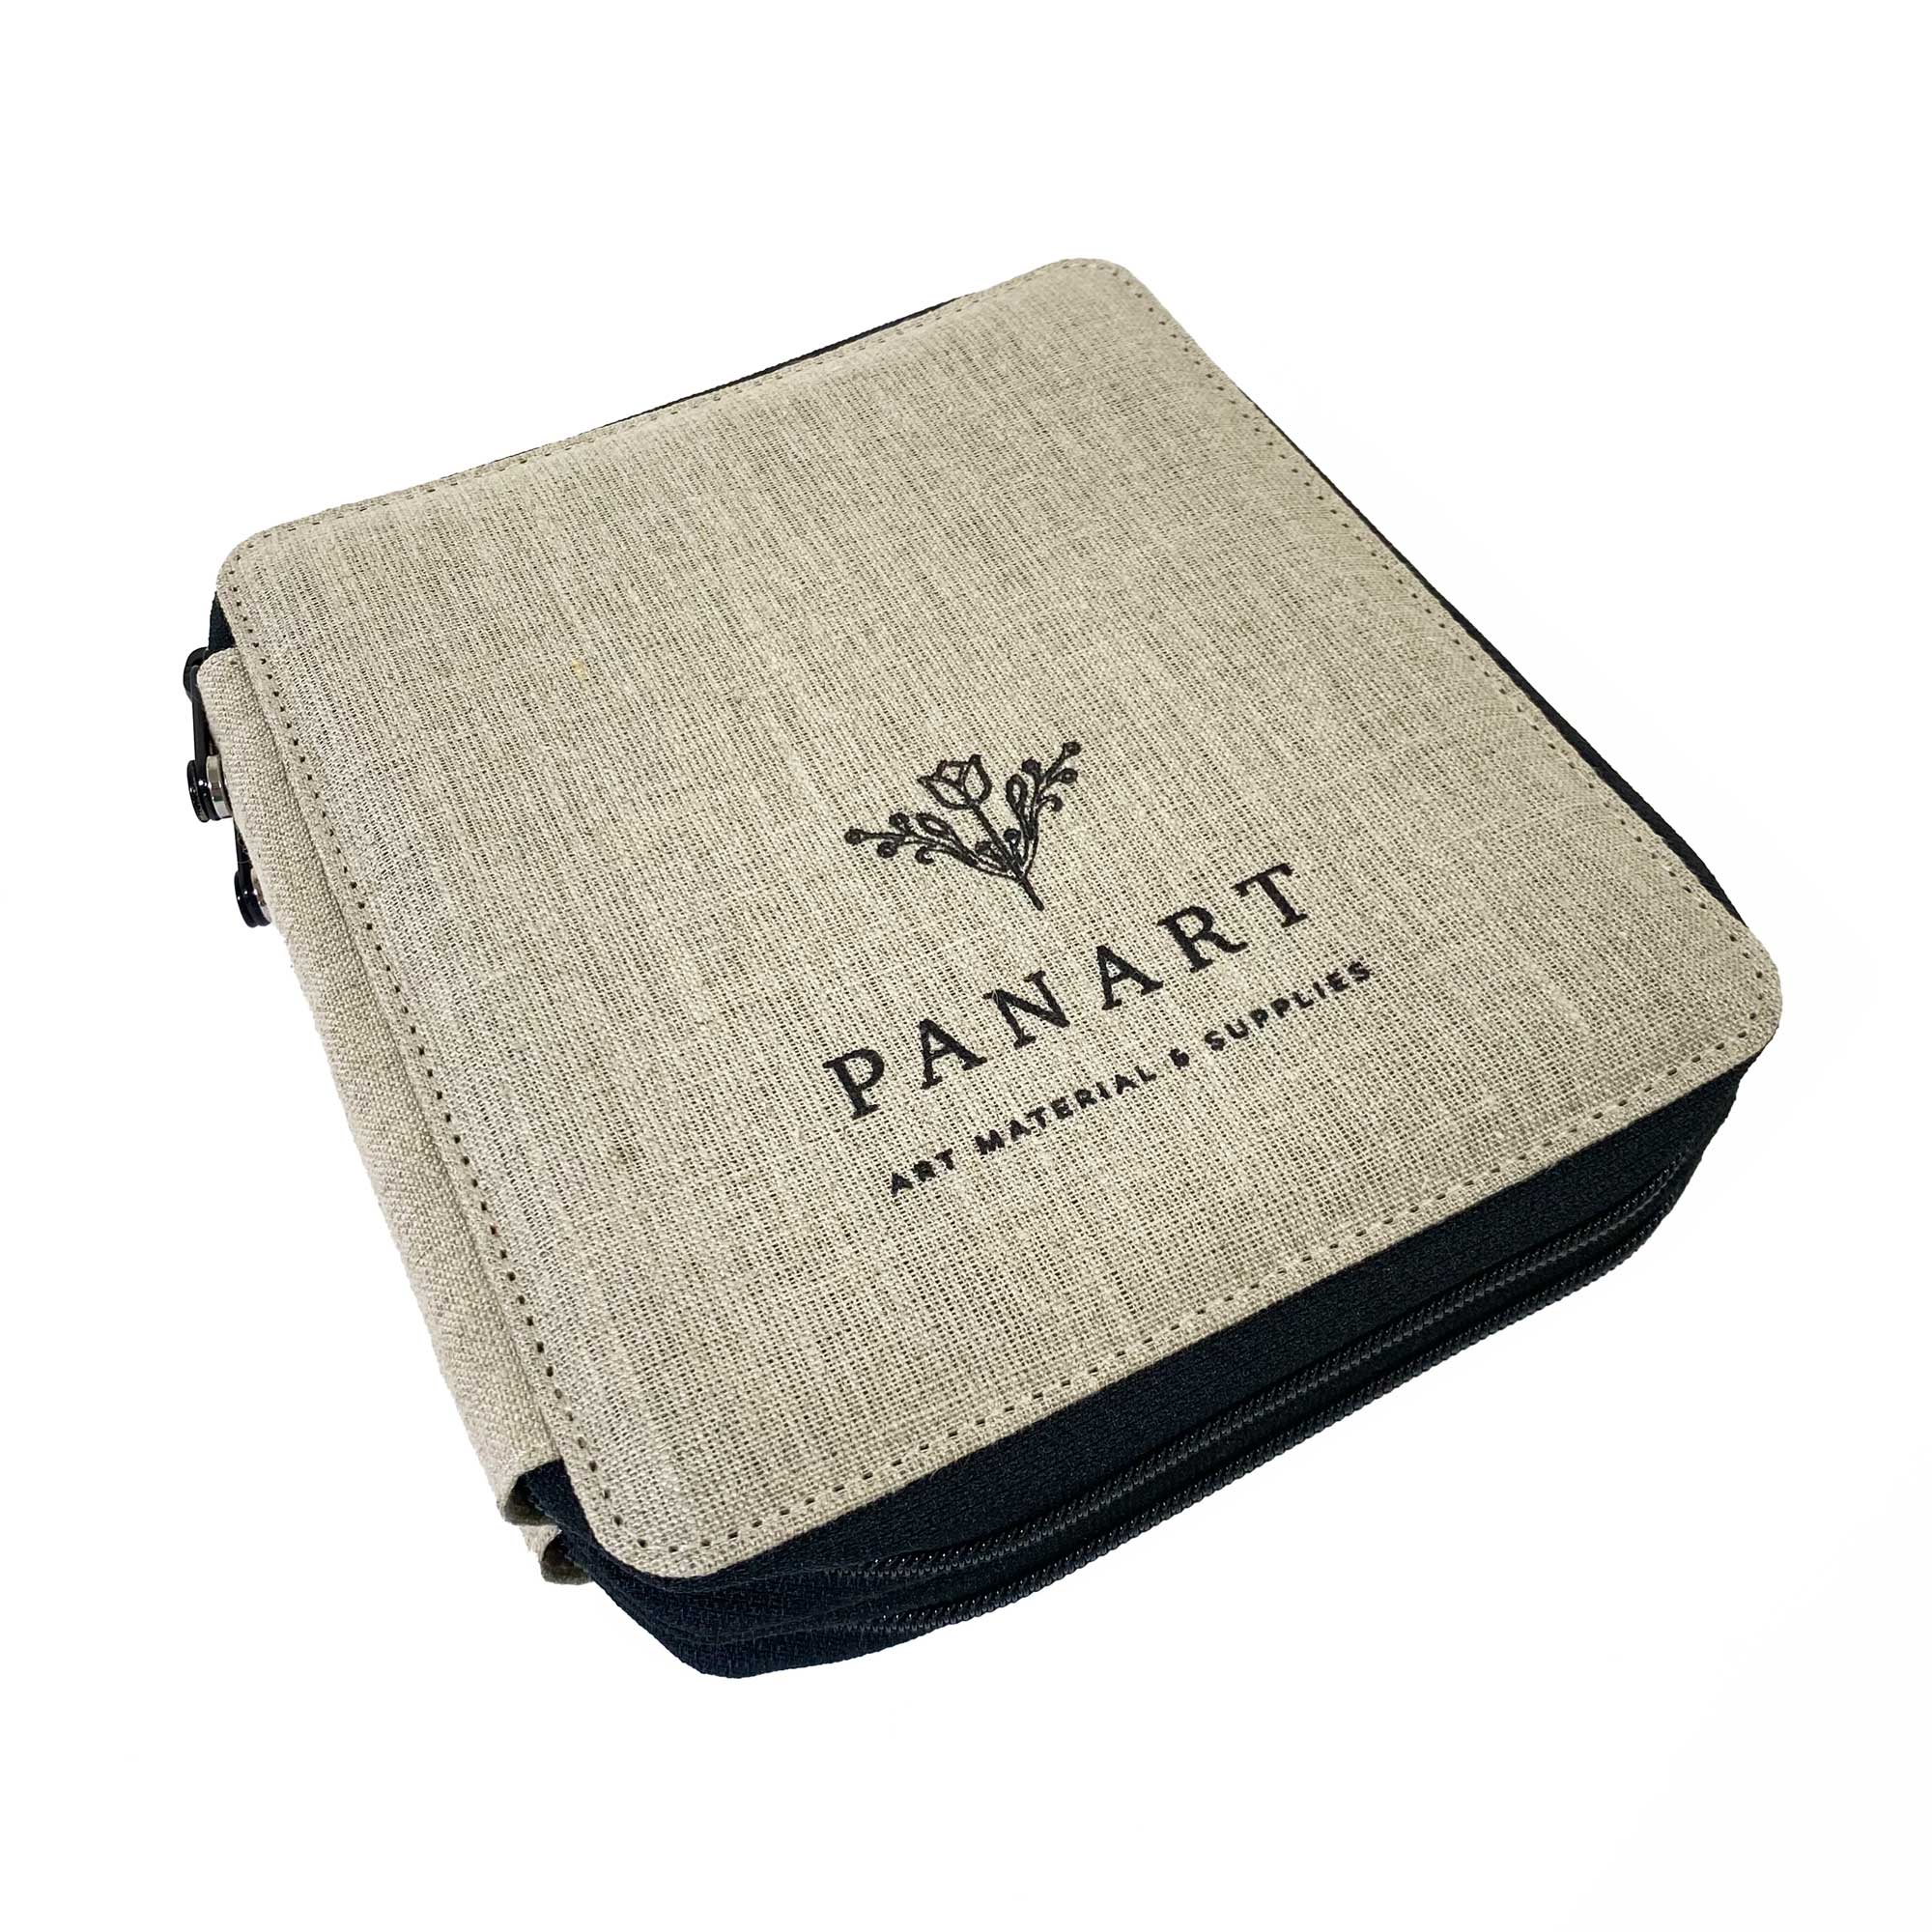 Panart : Linen Pencil Cases - Panart - Brands